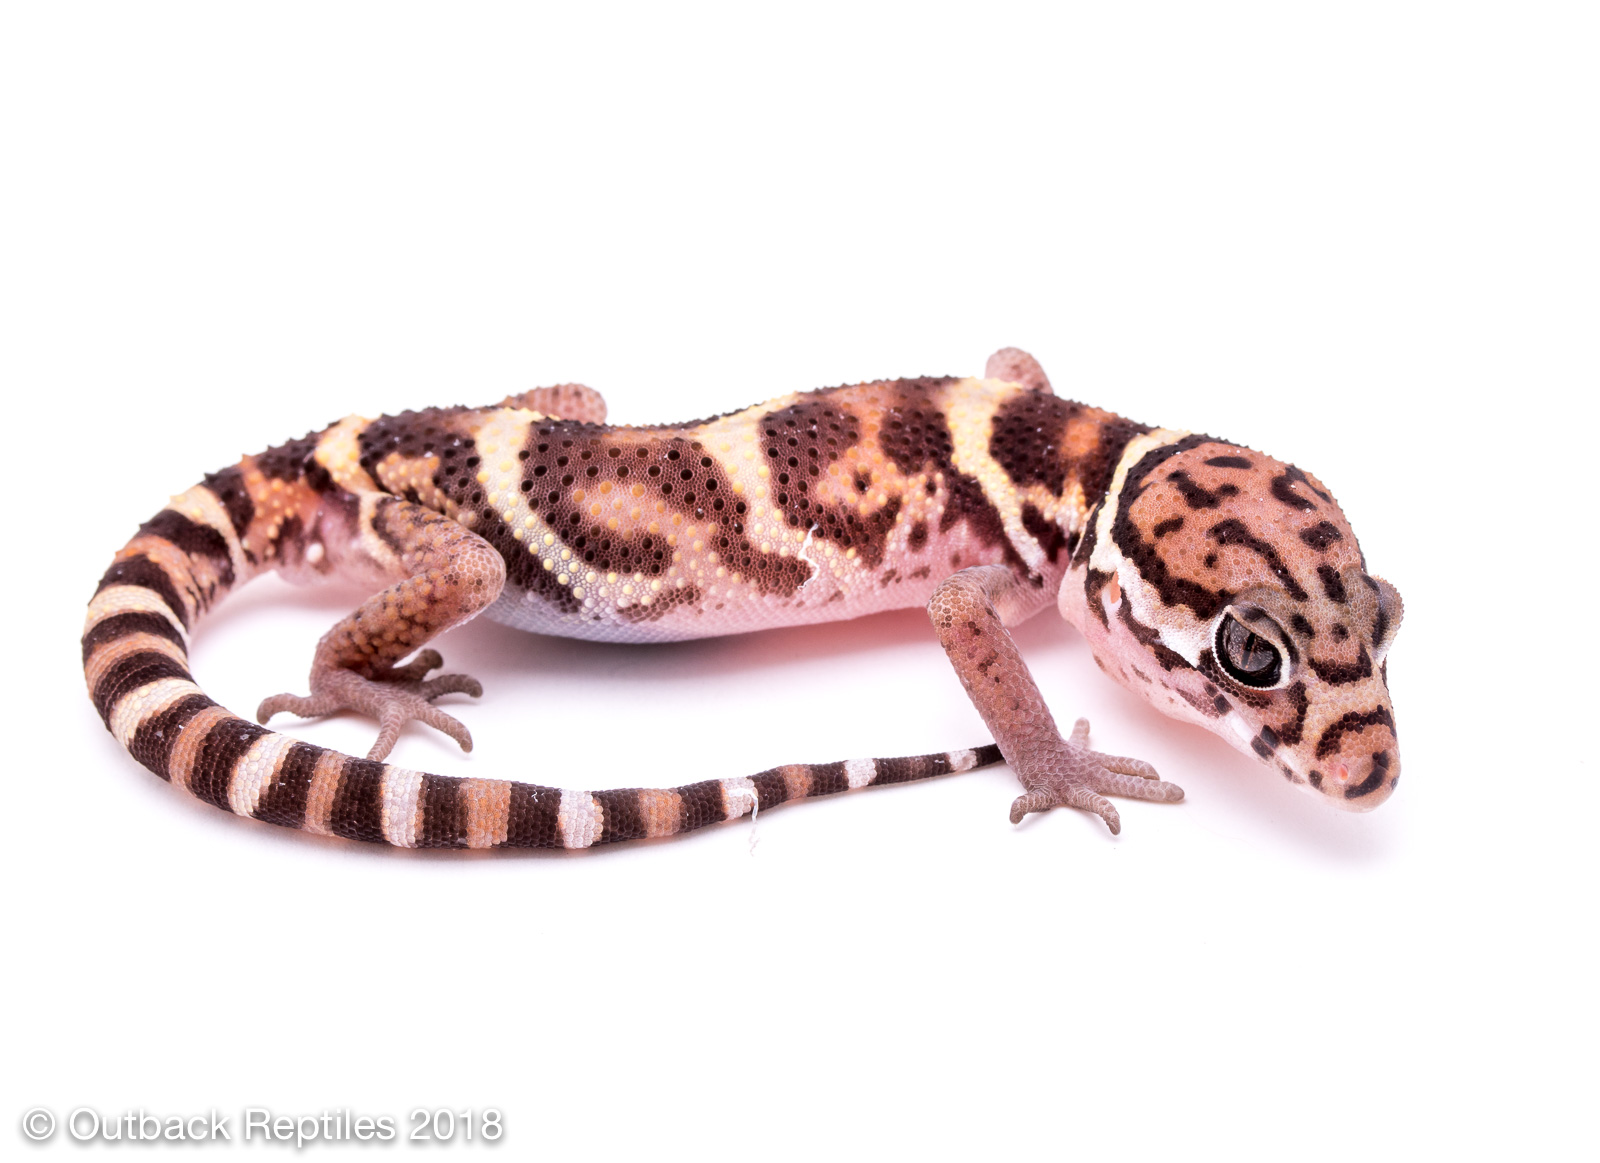 Central American Banded Gecko  - Coleonyx mitratus